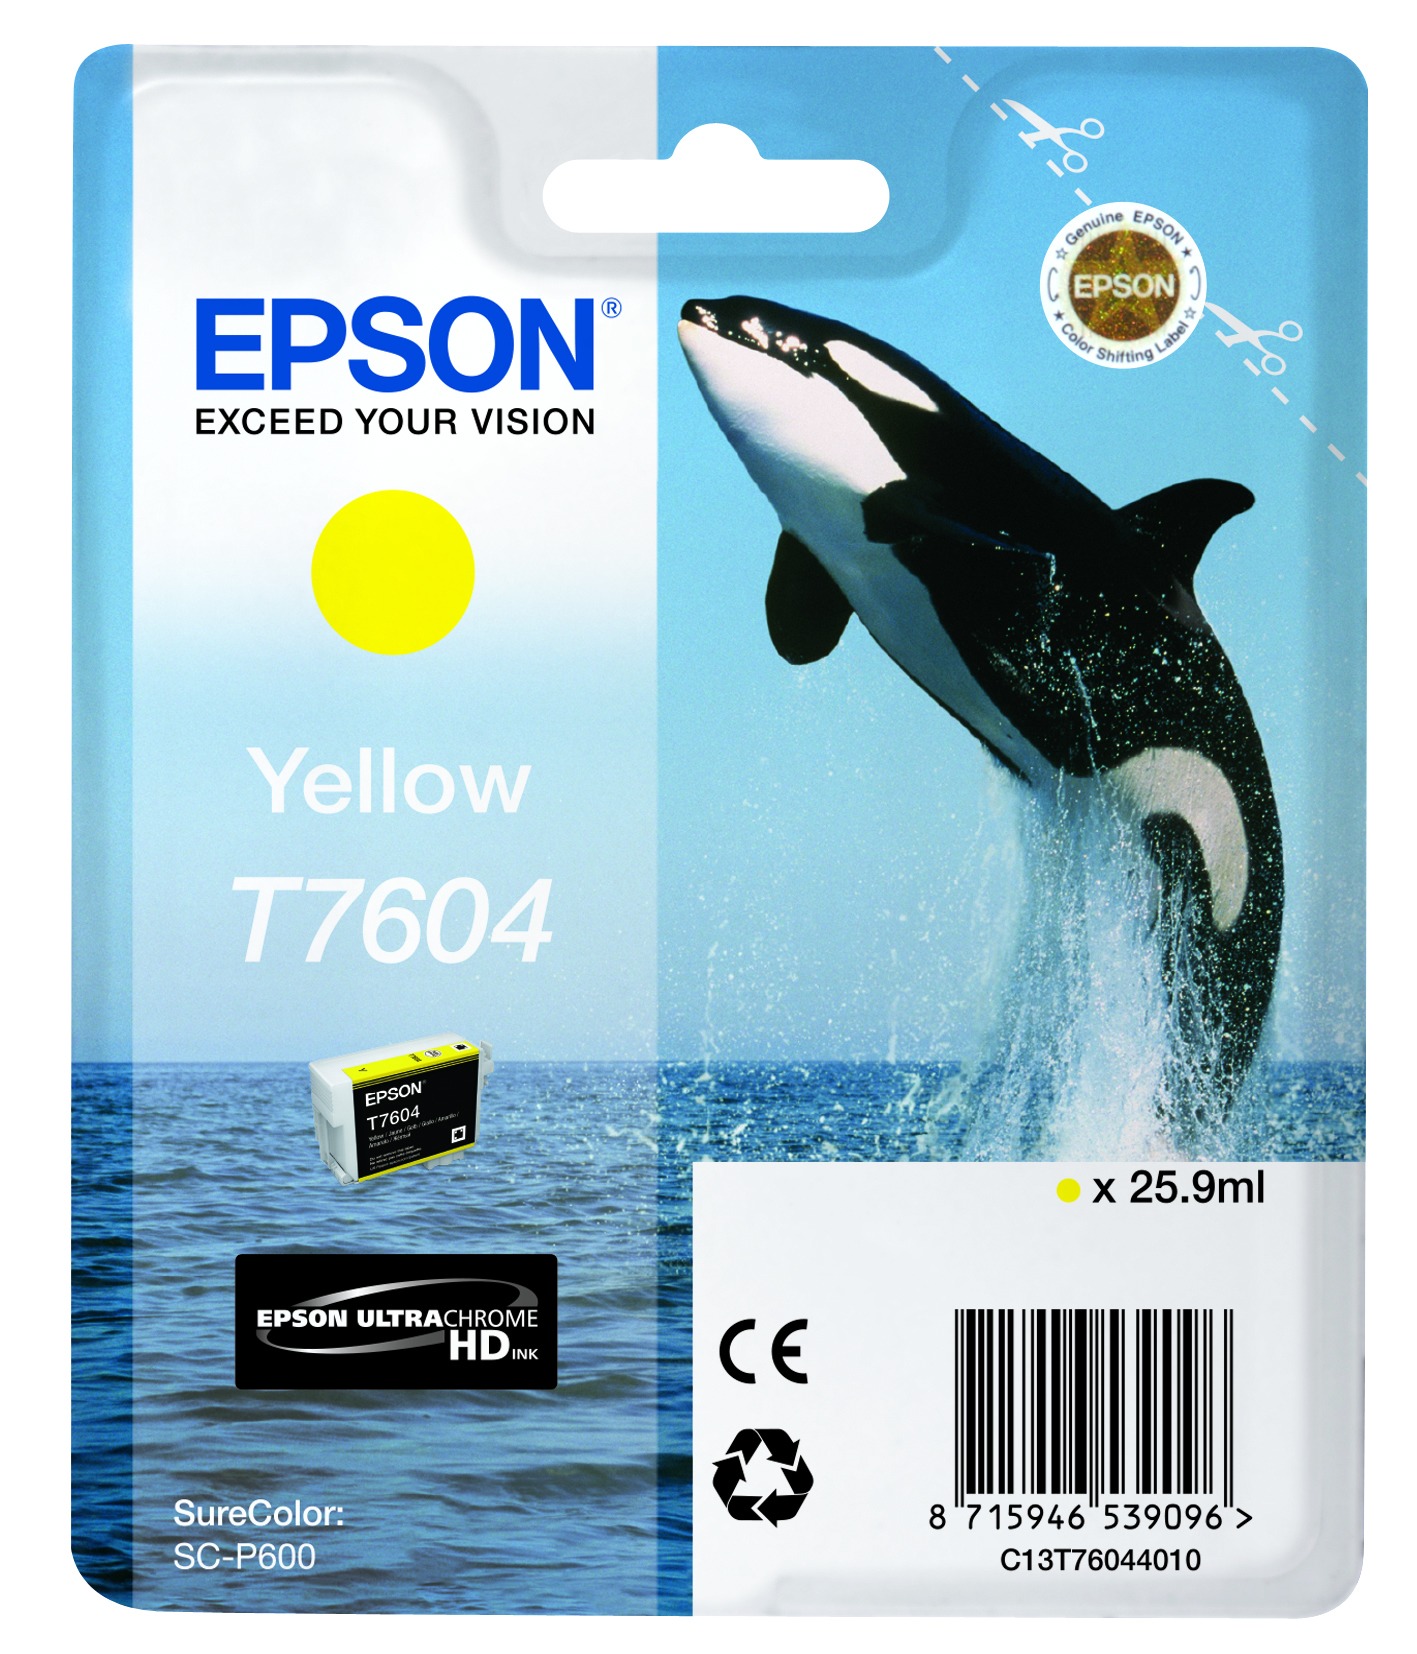 Epson Ink Cart/T7604 Yellow Inkt aanbieding